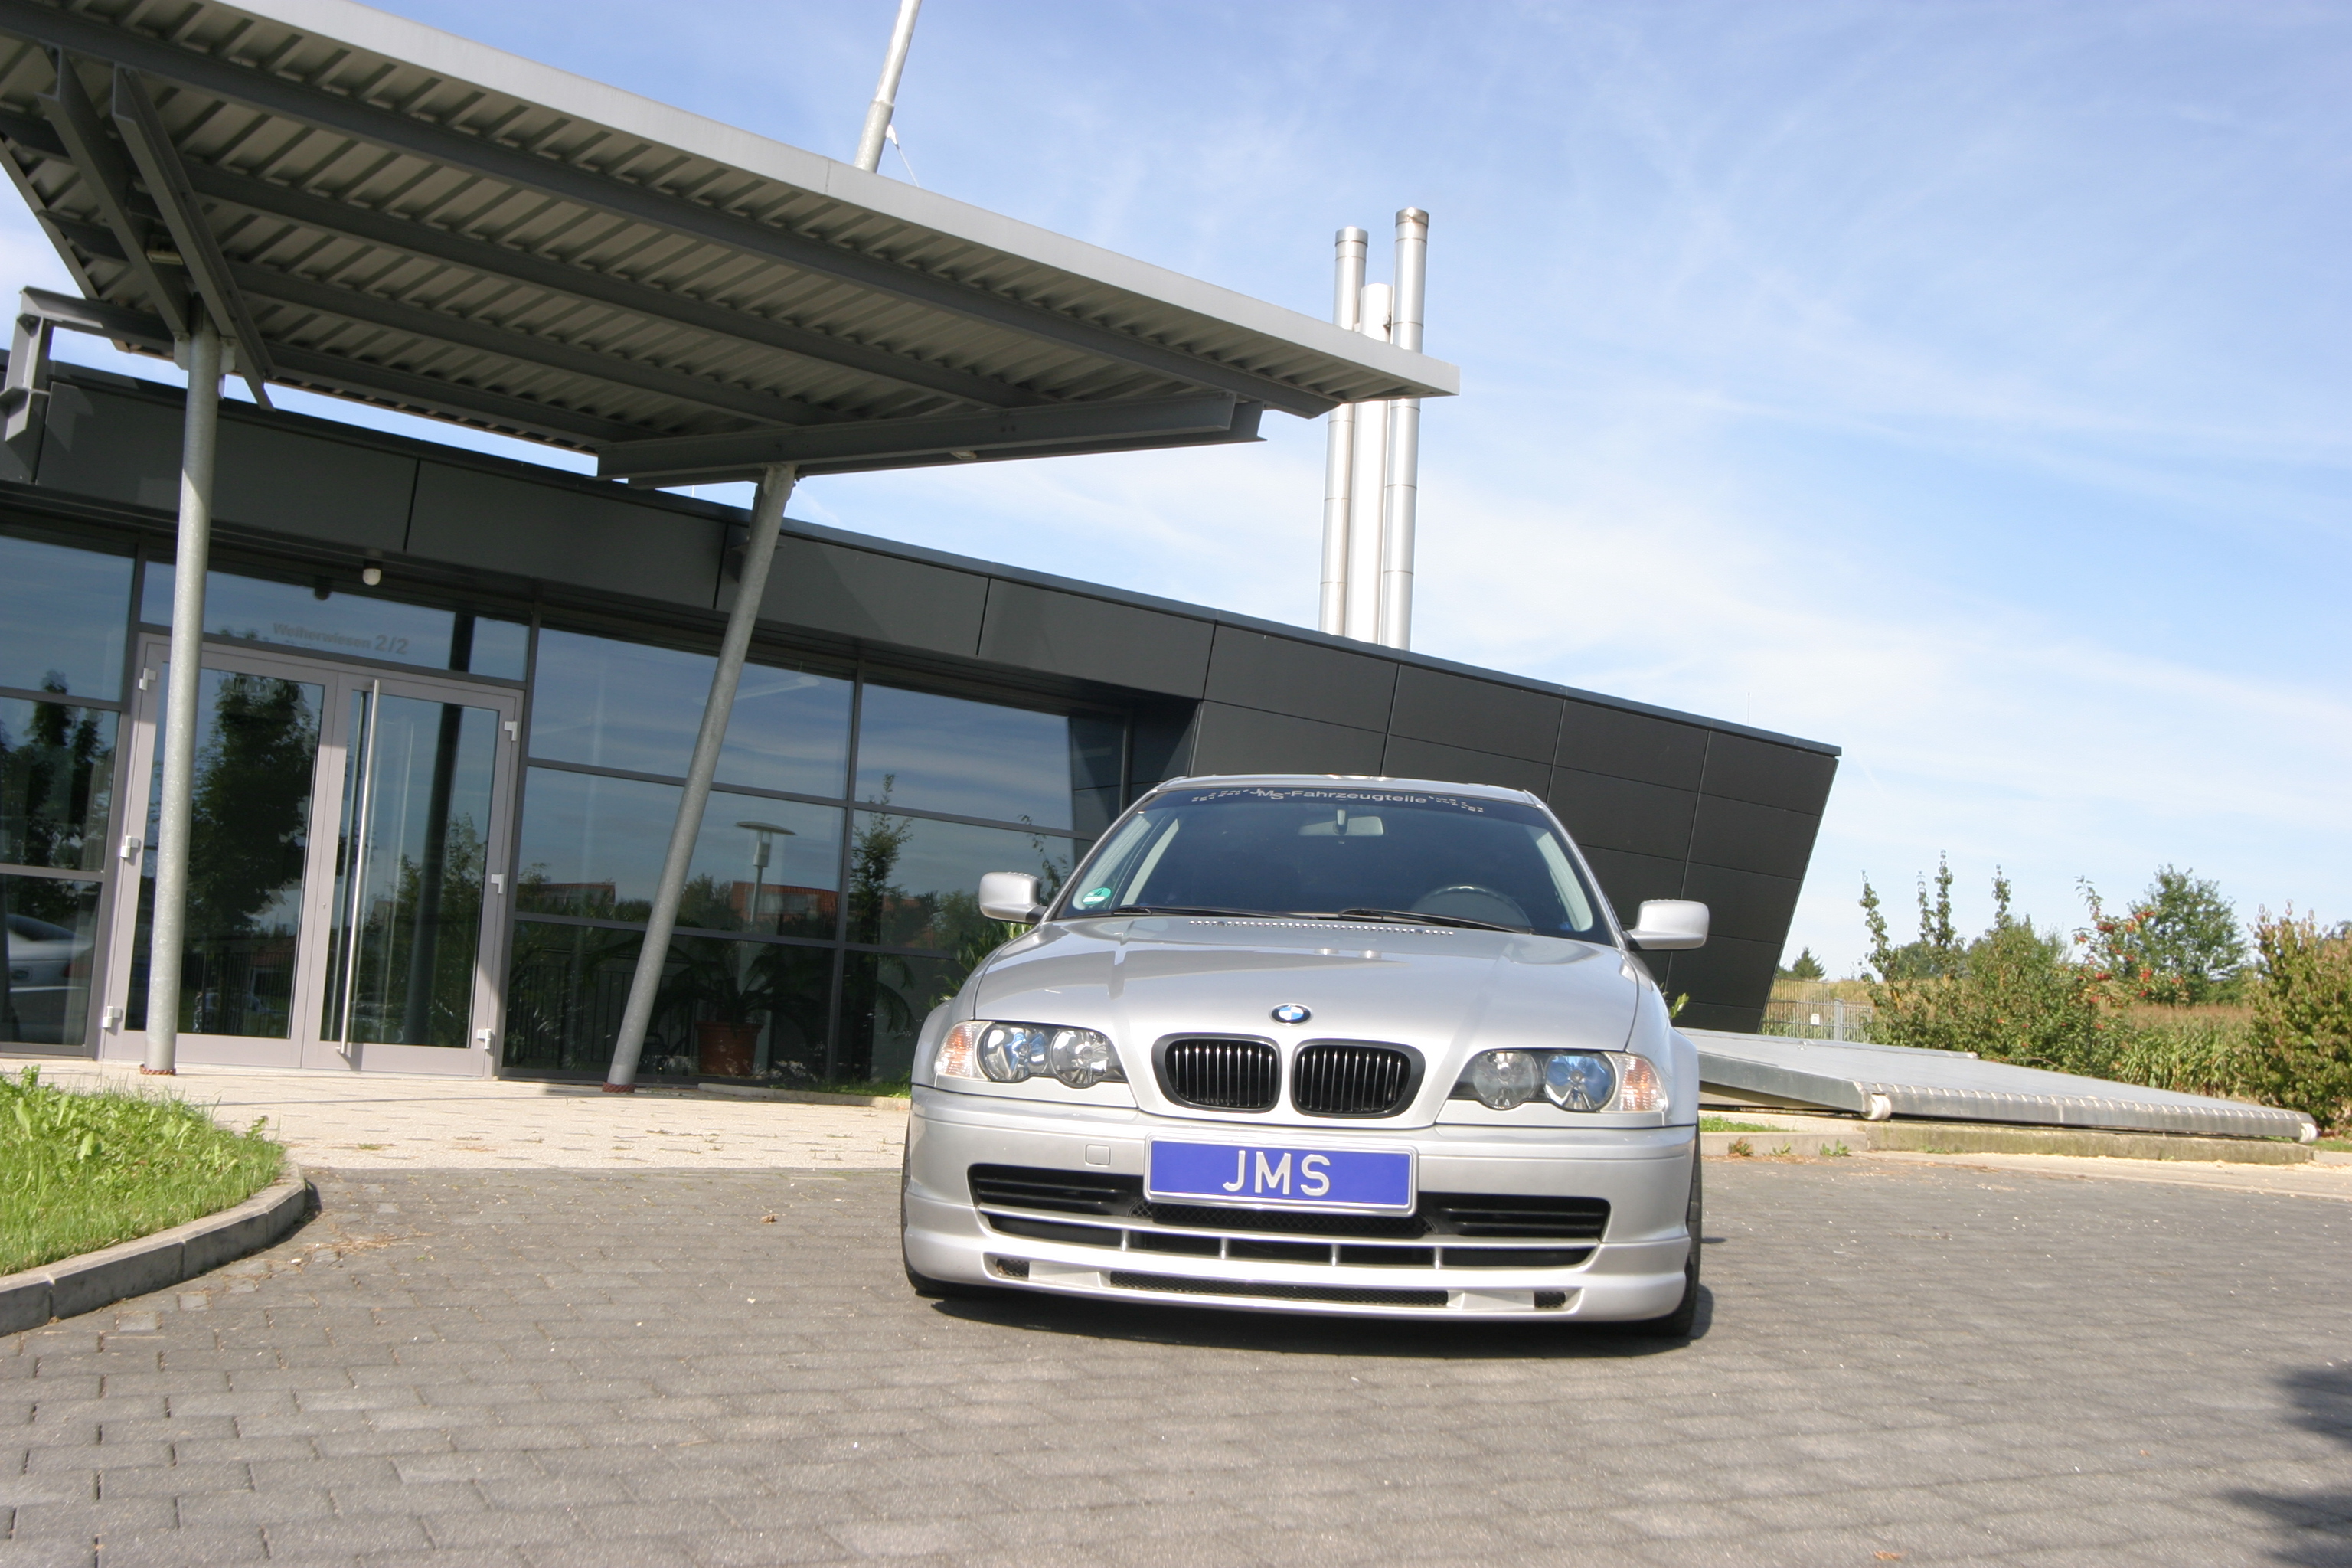 Bmw E46 tuning & styling, JMS - Fahrzeugteile GmbH, Story - PresseBox